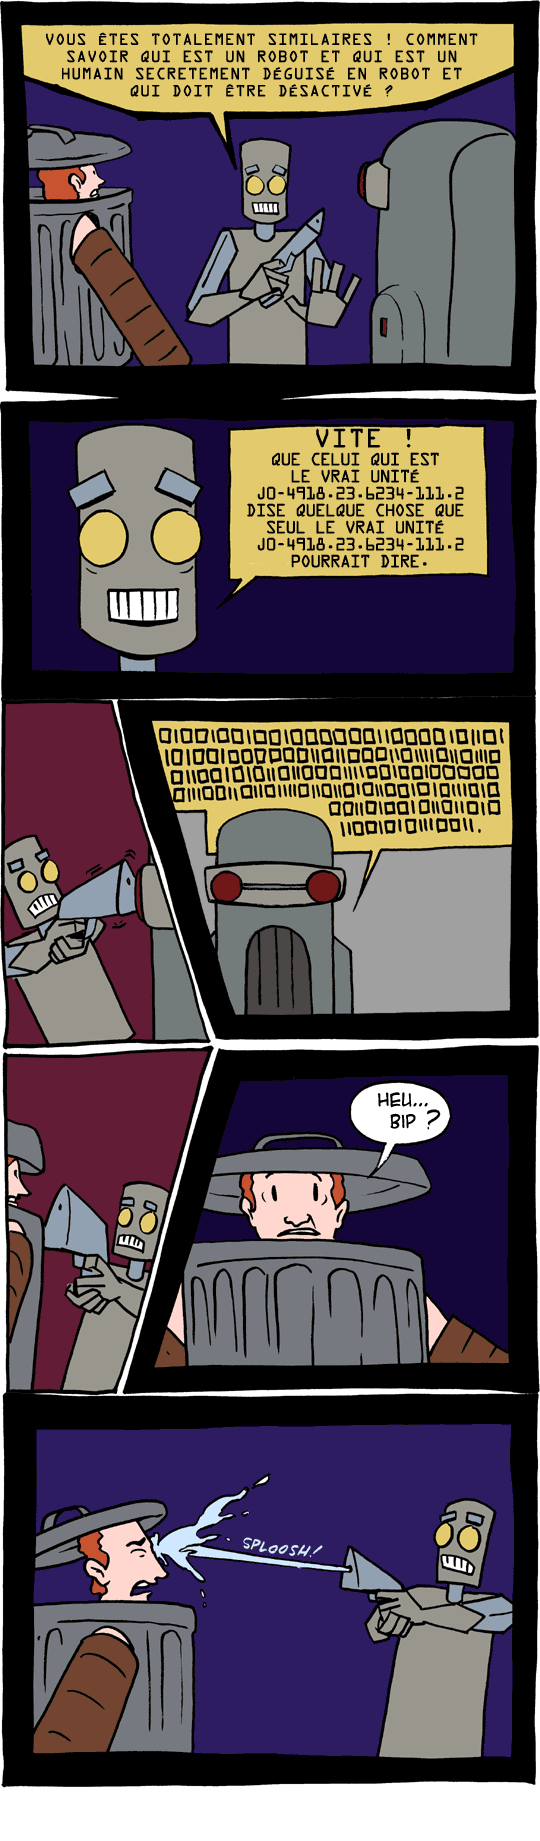 robot secret